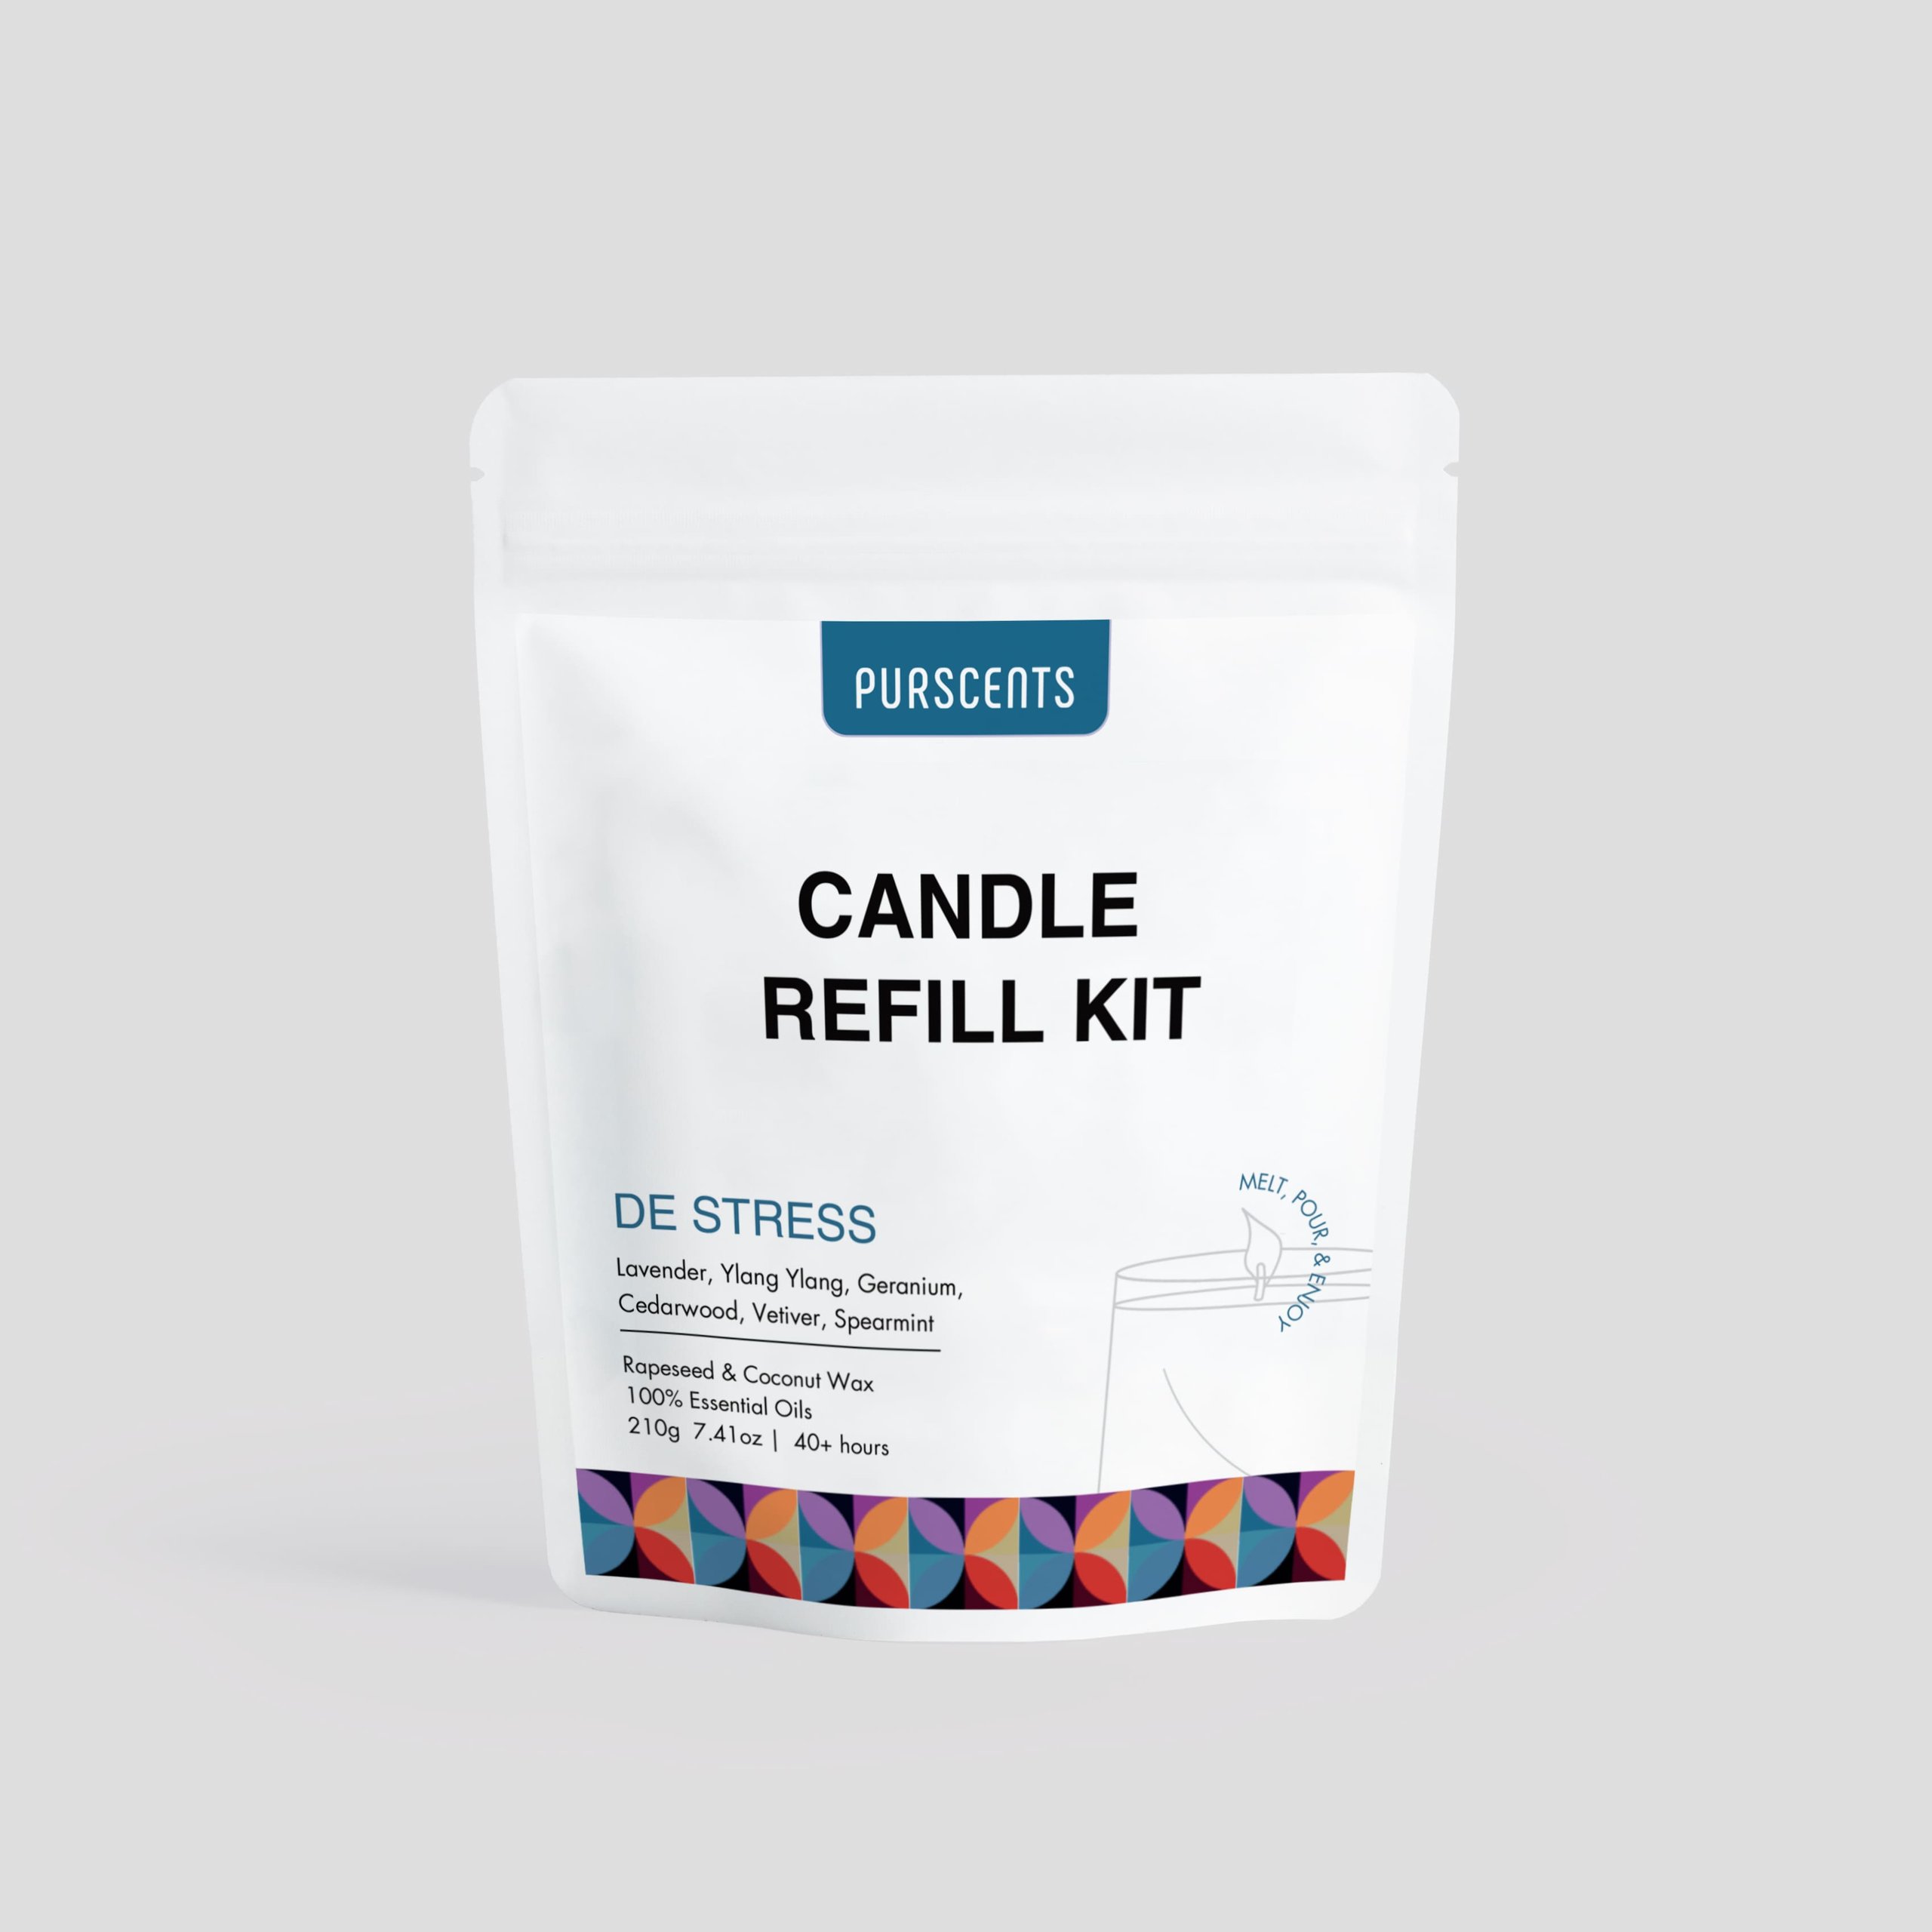 De Stress Candle Refill Kit